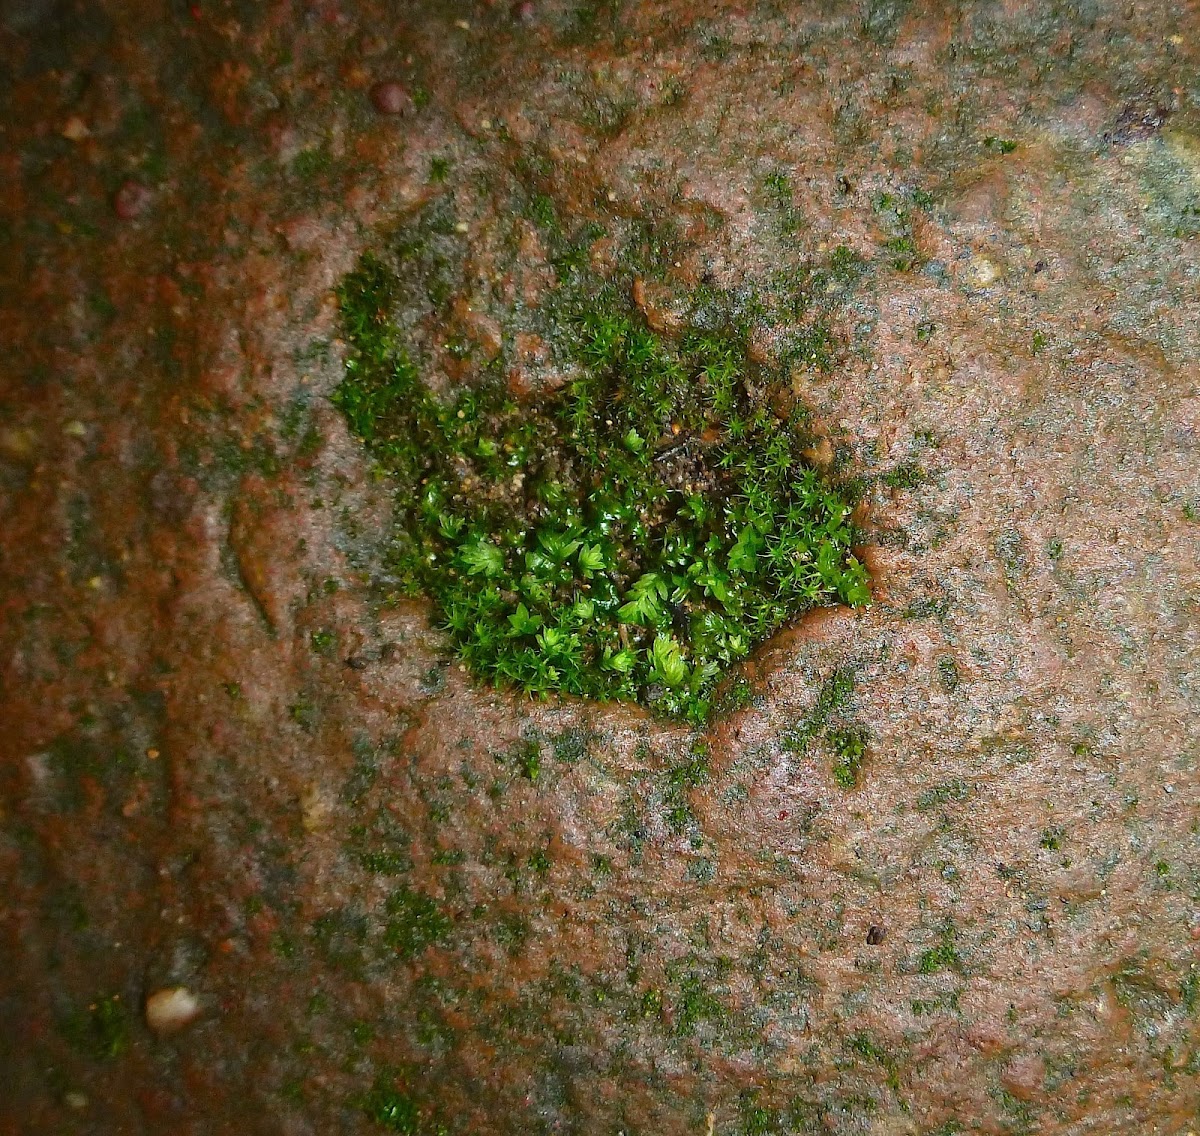 Microcosm of Moss